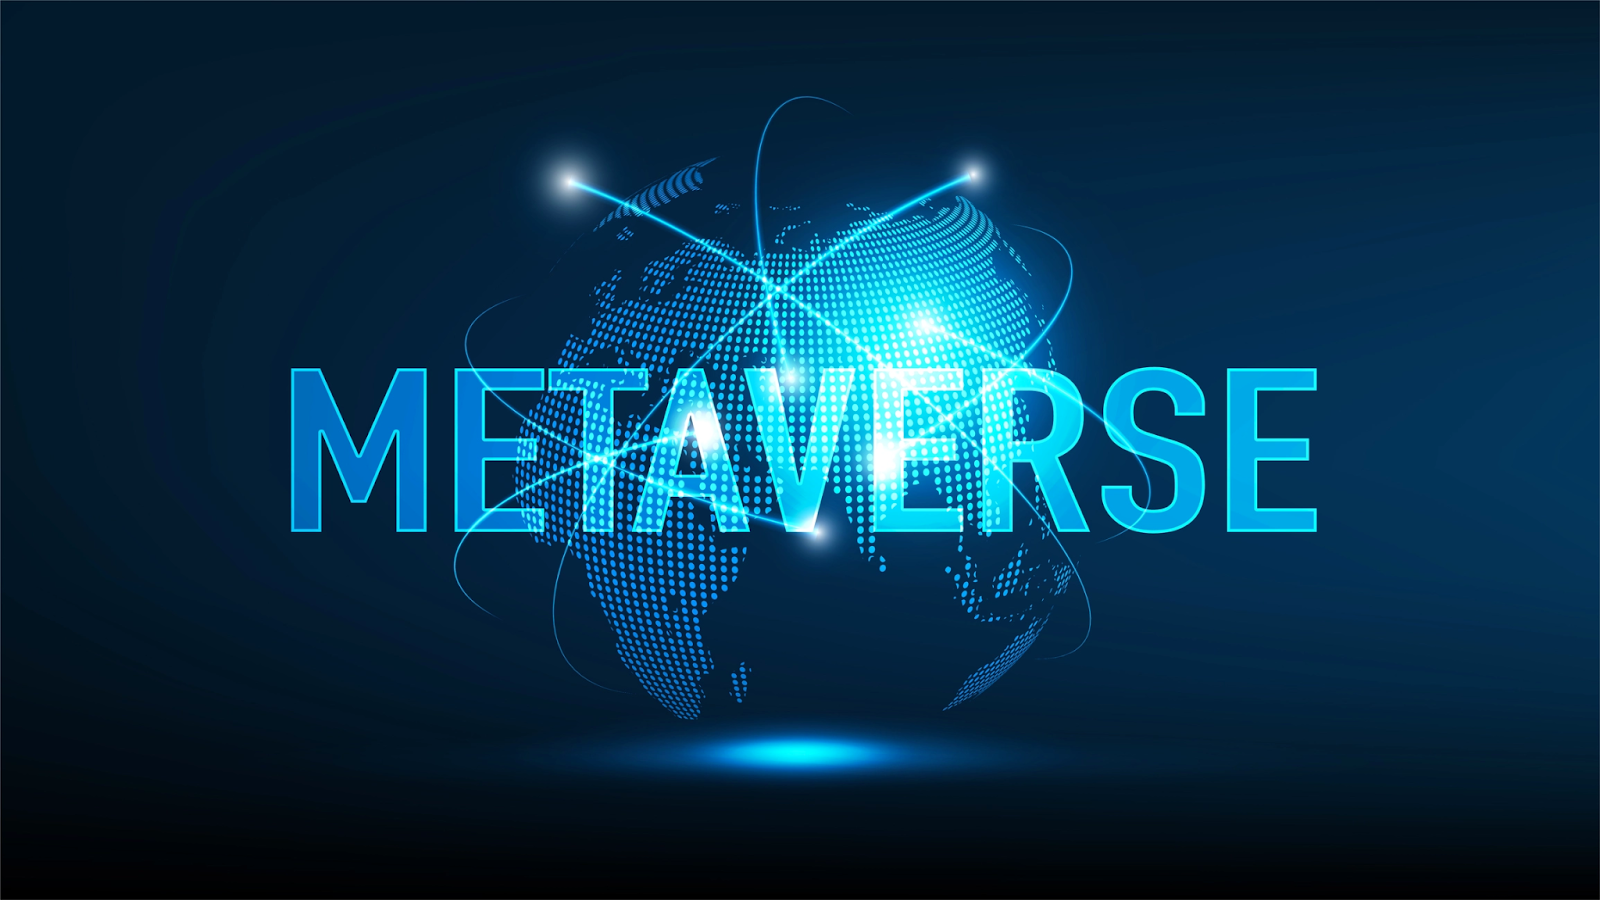 Top 5 metaverse development services to consider